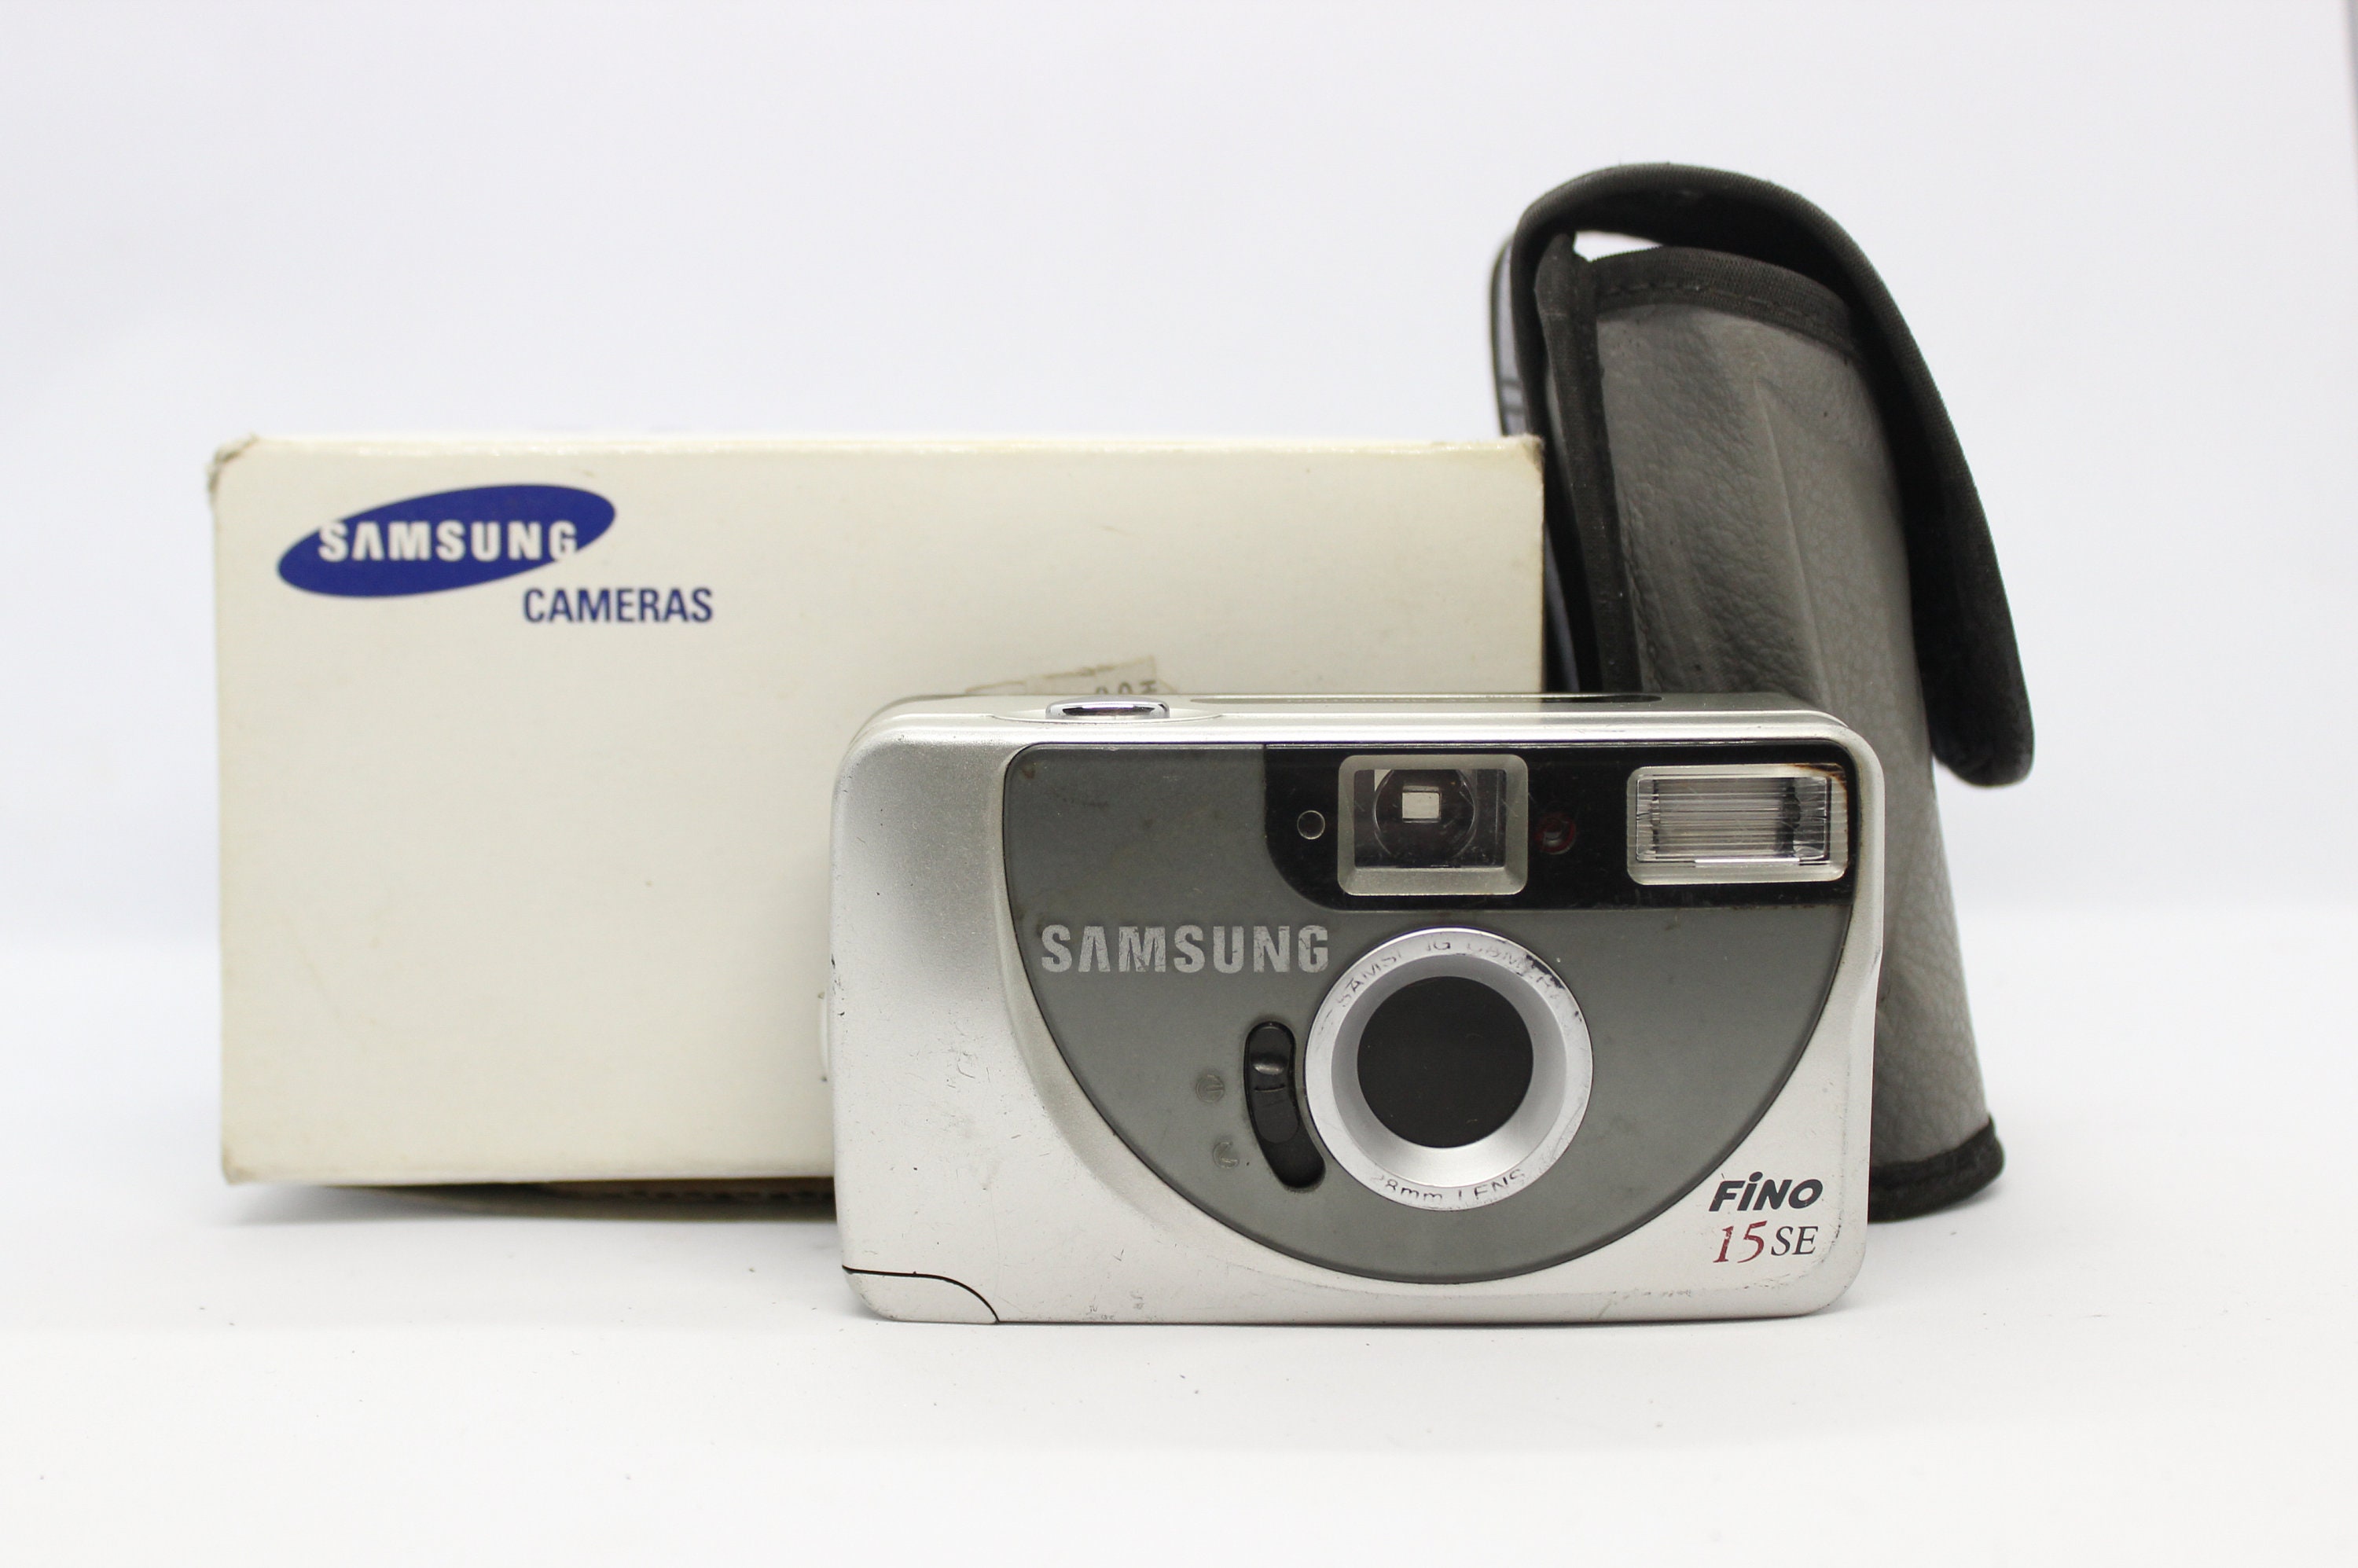 Samsung FINO 15 SE 35mm Point & Shoot Camera in Original Package